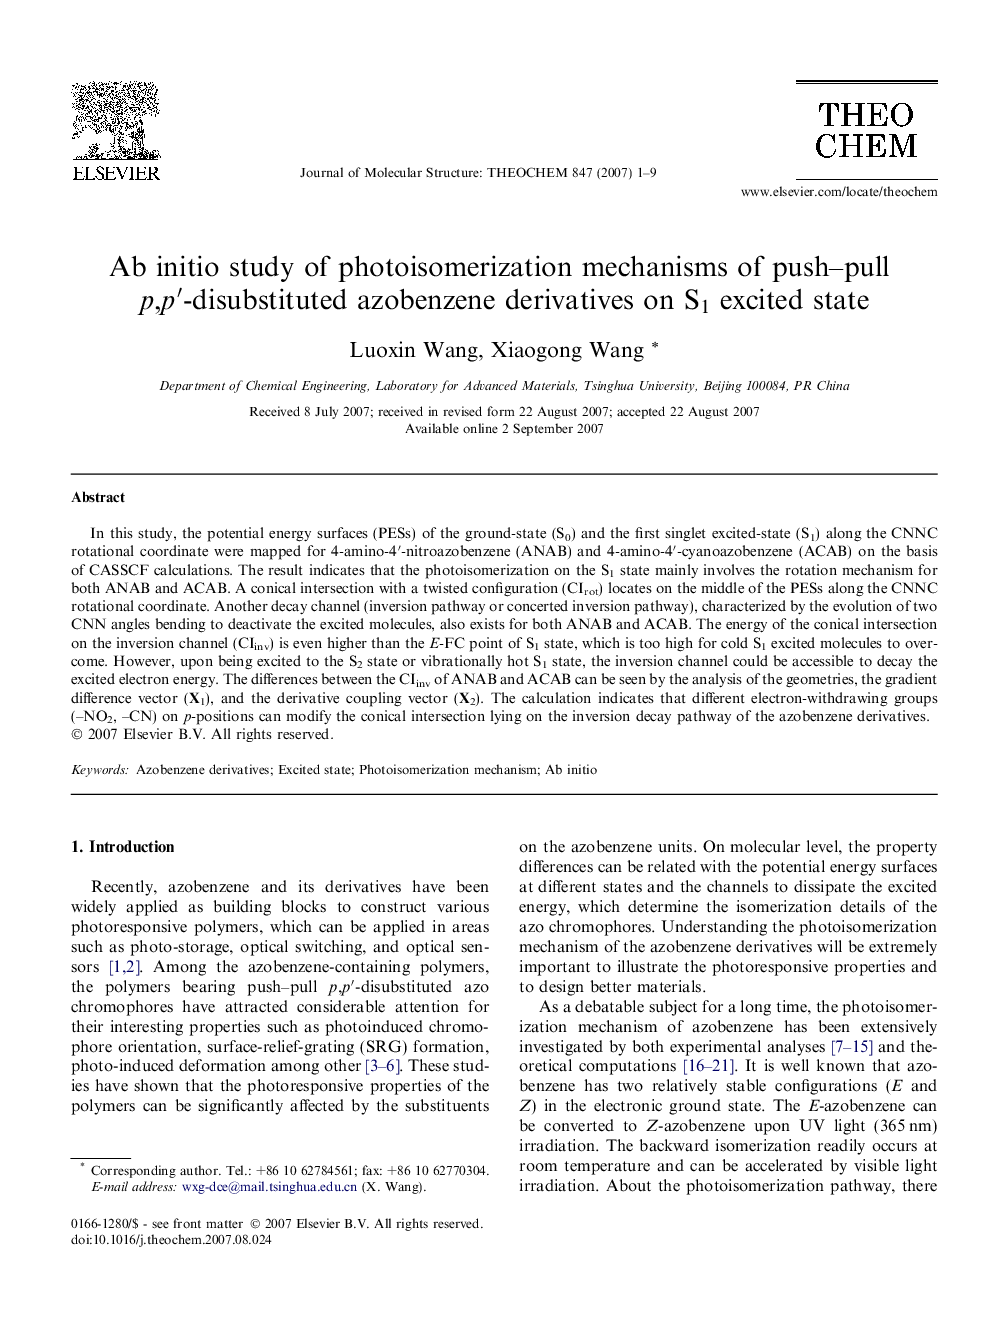 Ab initio study of photoisomerization mechanisms of push-pull p,pâ²-disubstituted azobenzene derivatives on S1 excited state